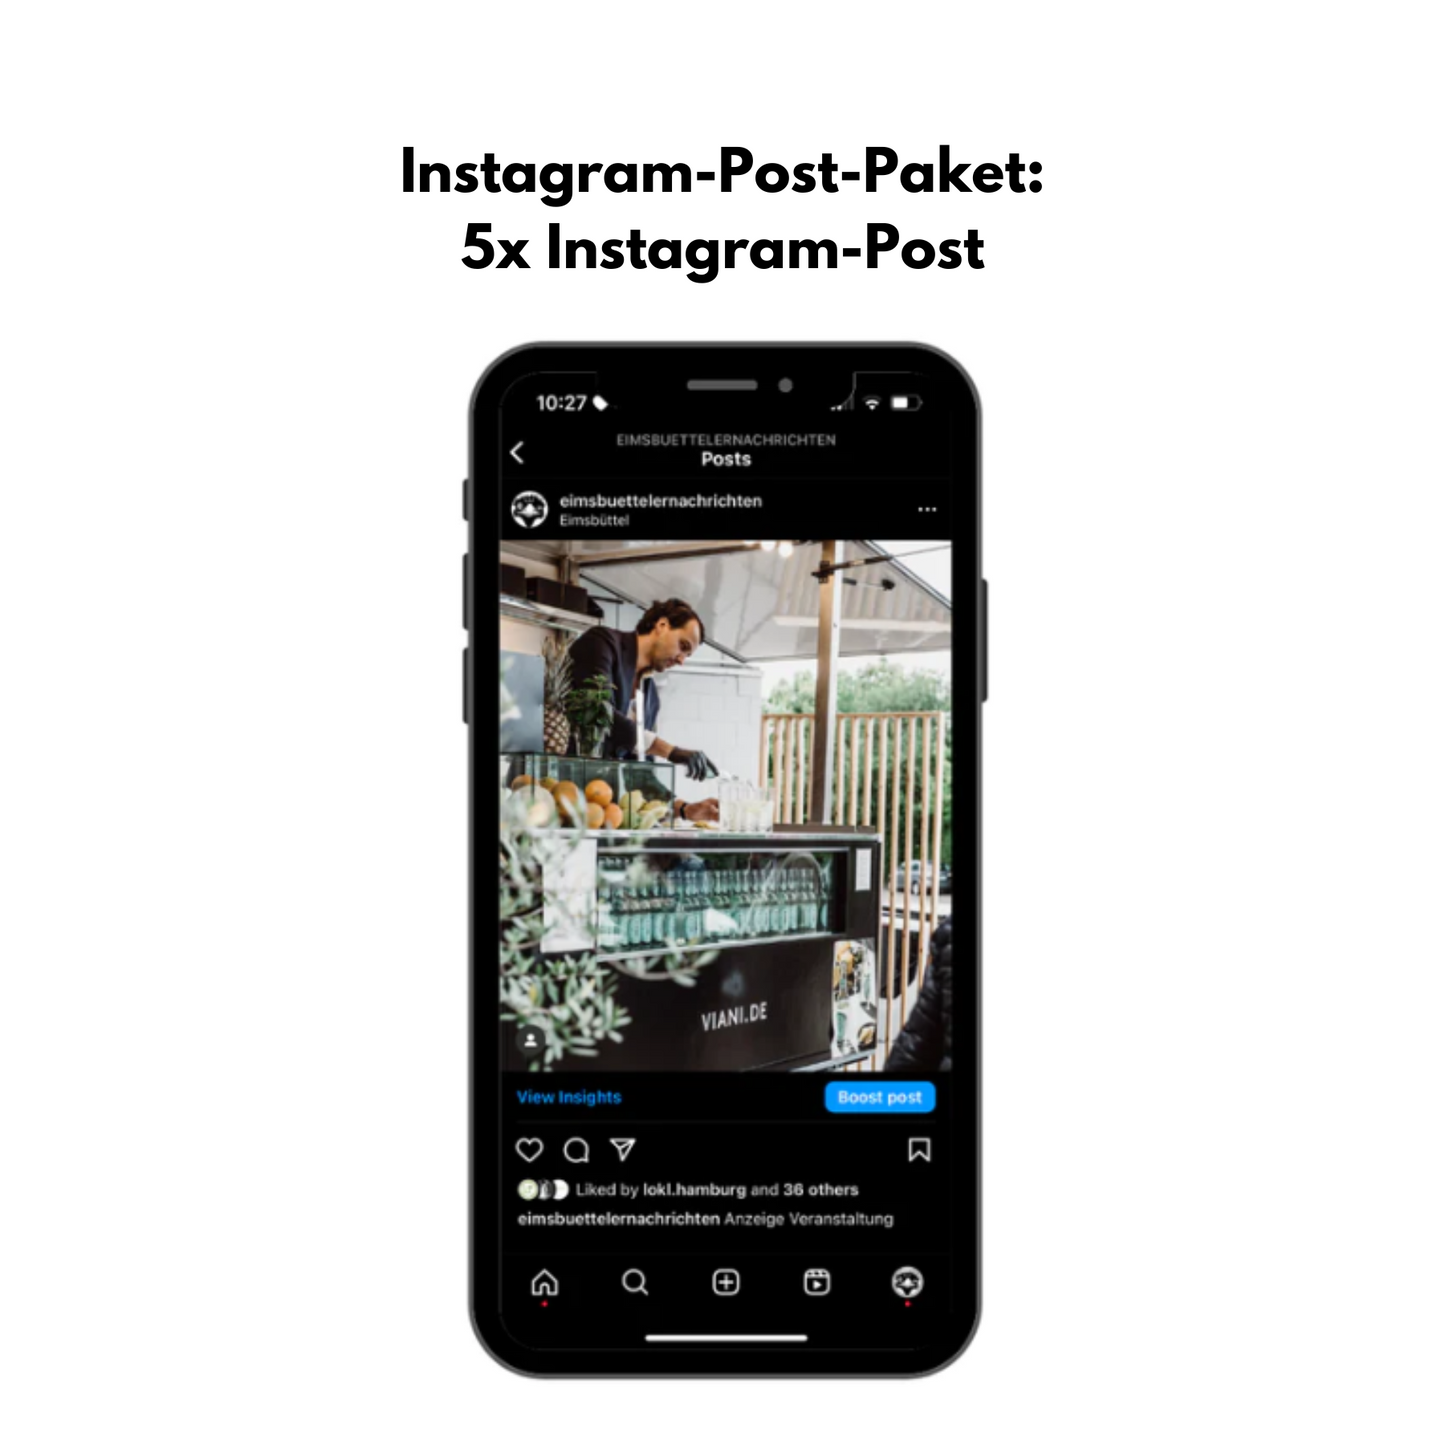 Instagram-Post